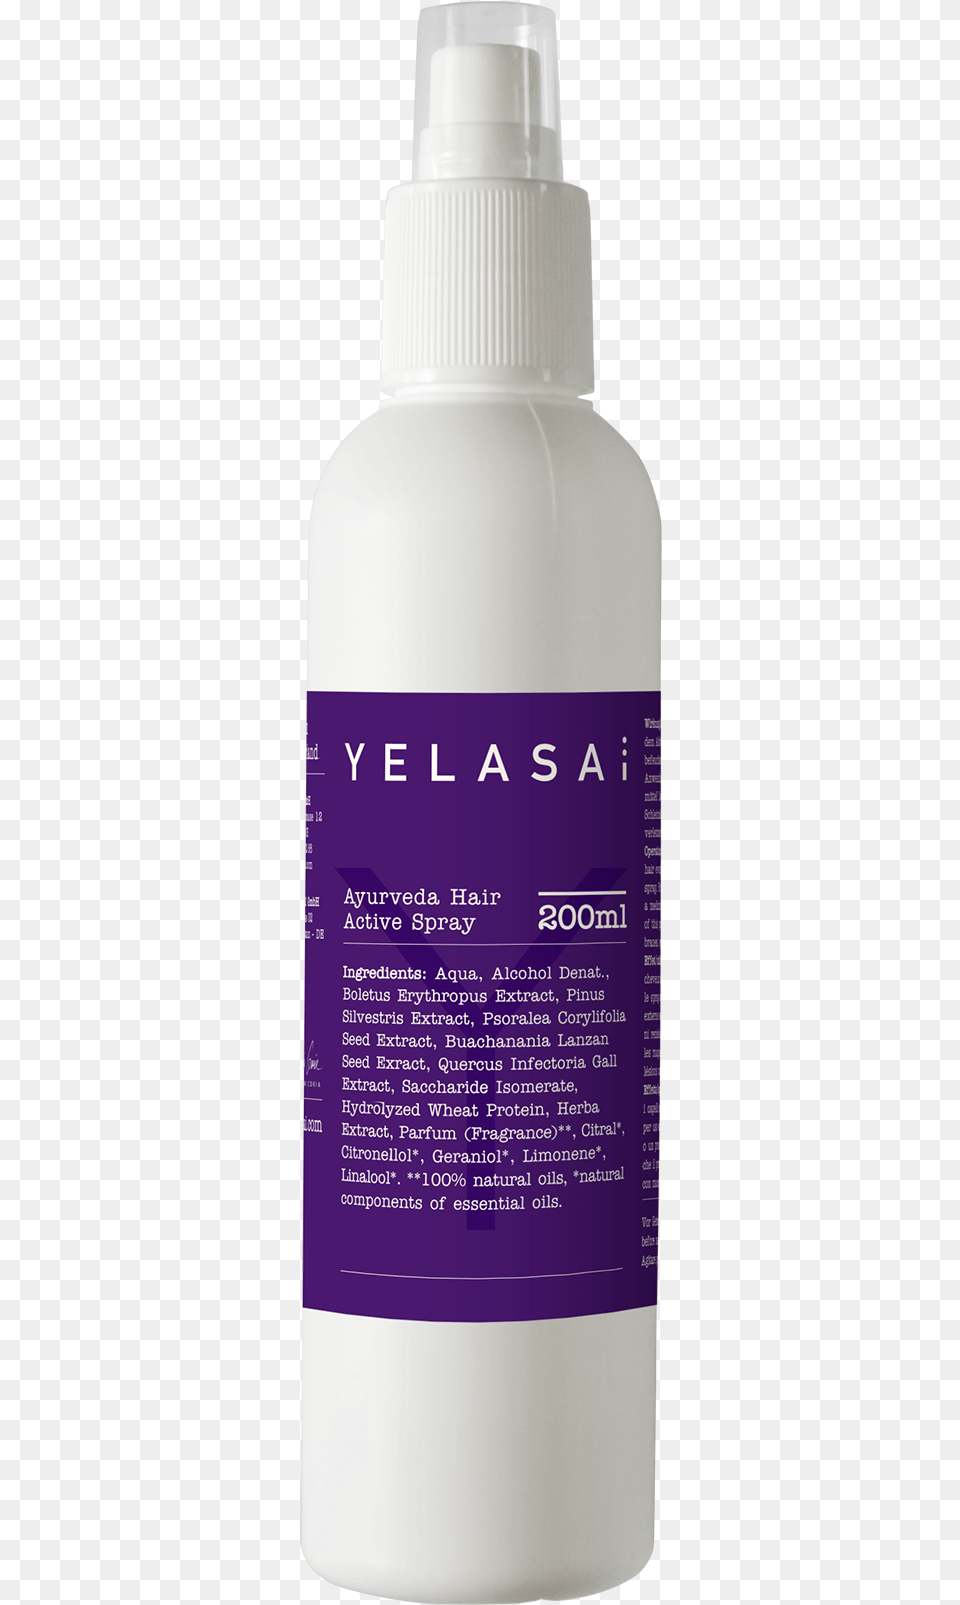 Ayurveda Hair Active Spray 200ml Body Wash, Bottle Free Transparent Png